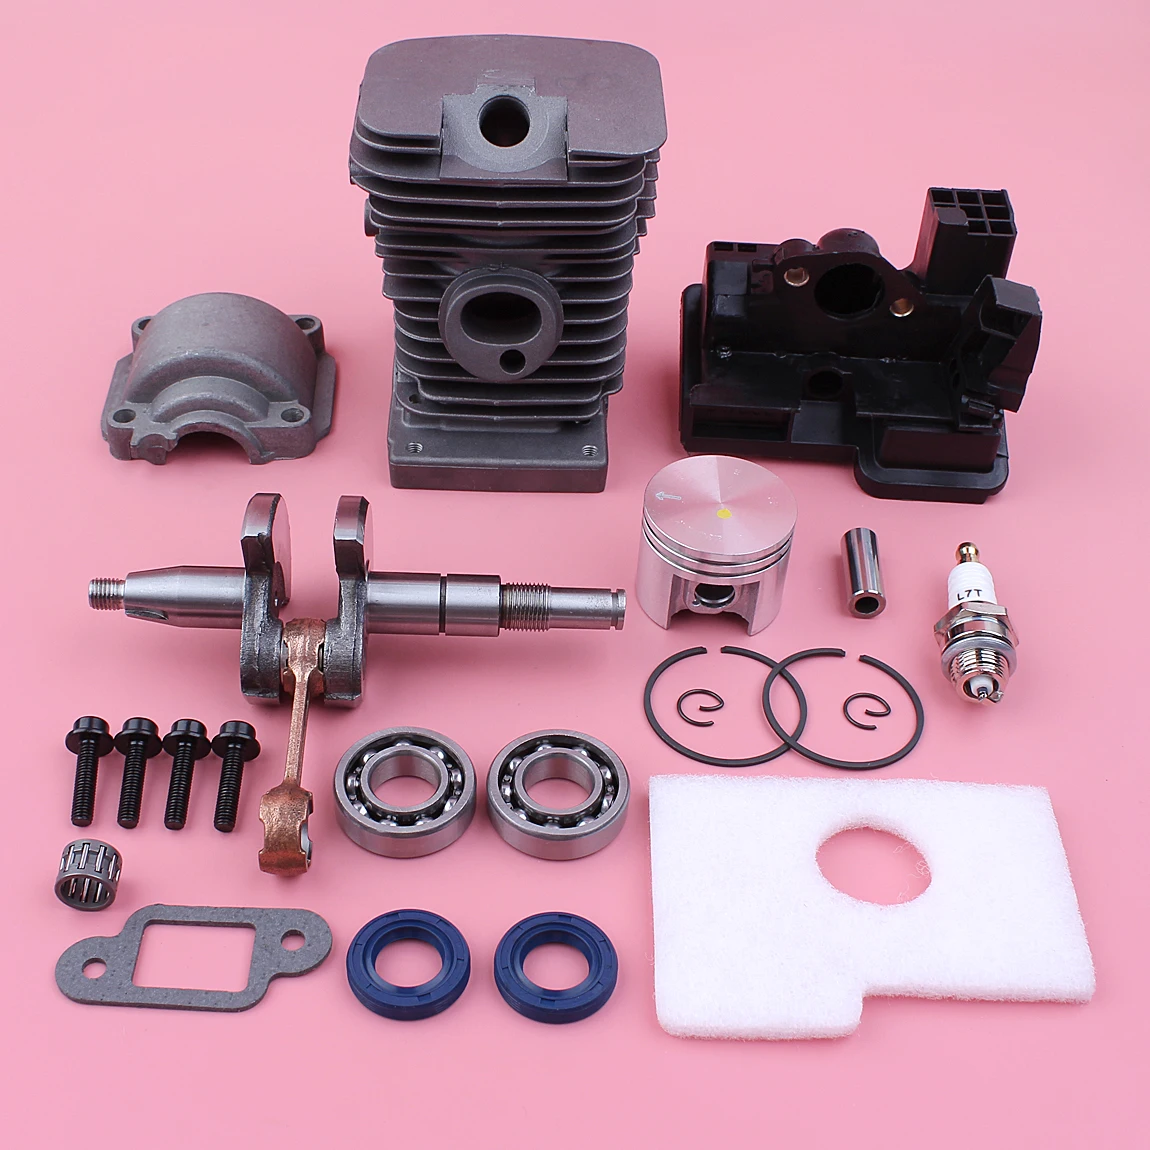 38mm Cylinder Piston Crankshaft Engine Pan Kit For Stihl 018 MS 180 Chainsaw Engine Motor Parts Professional Gasoline